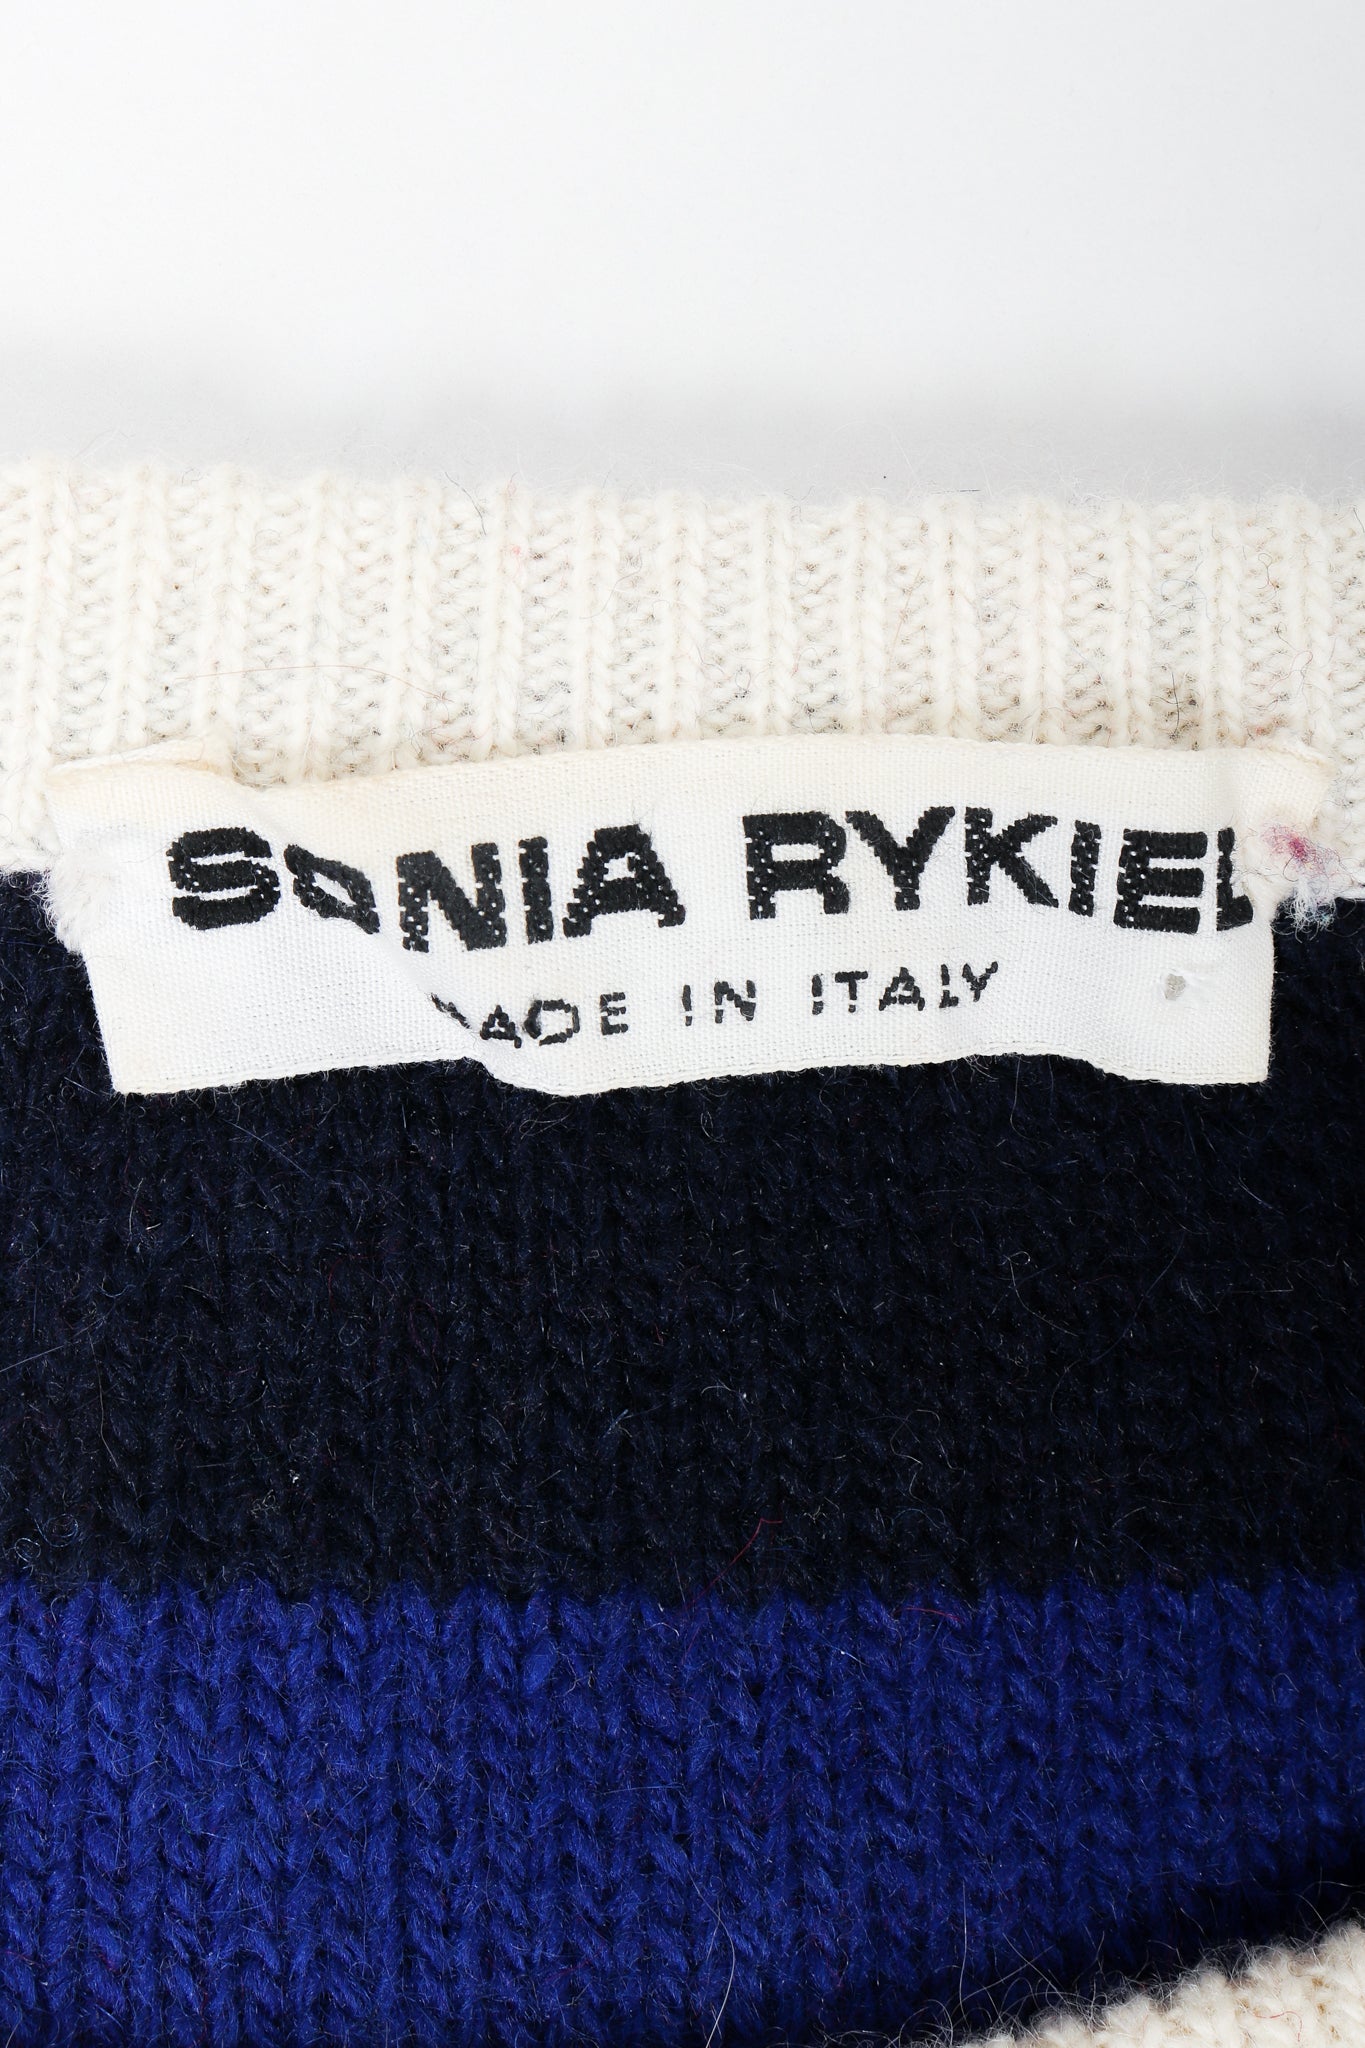 Vintage Sonia Rykiel label on navy blue